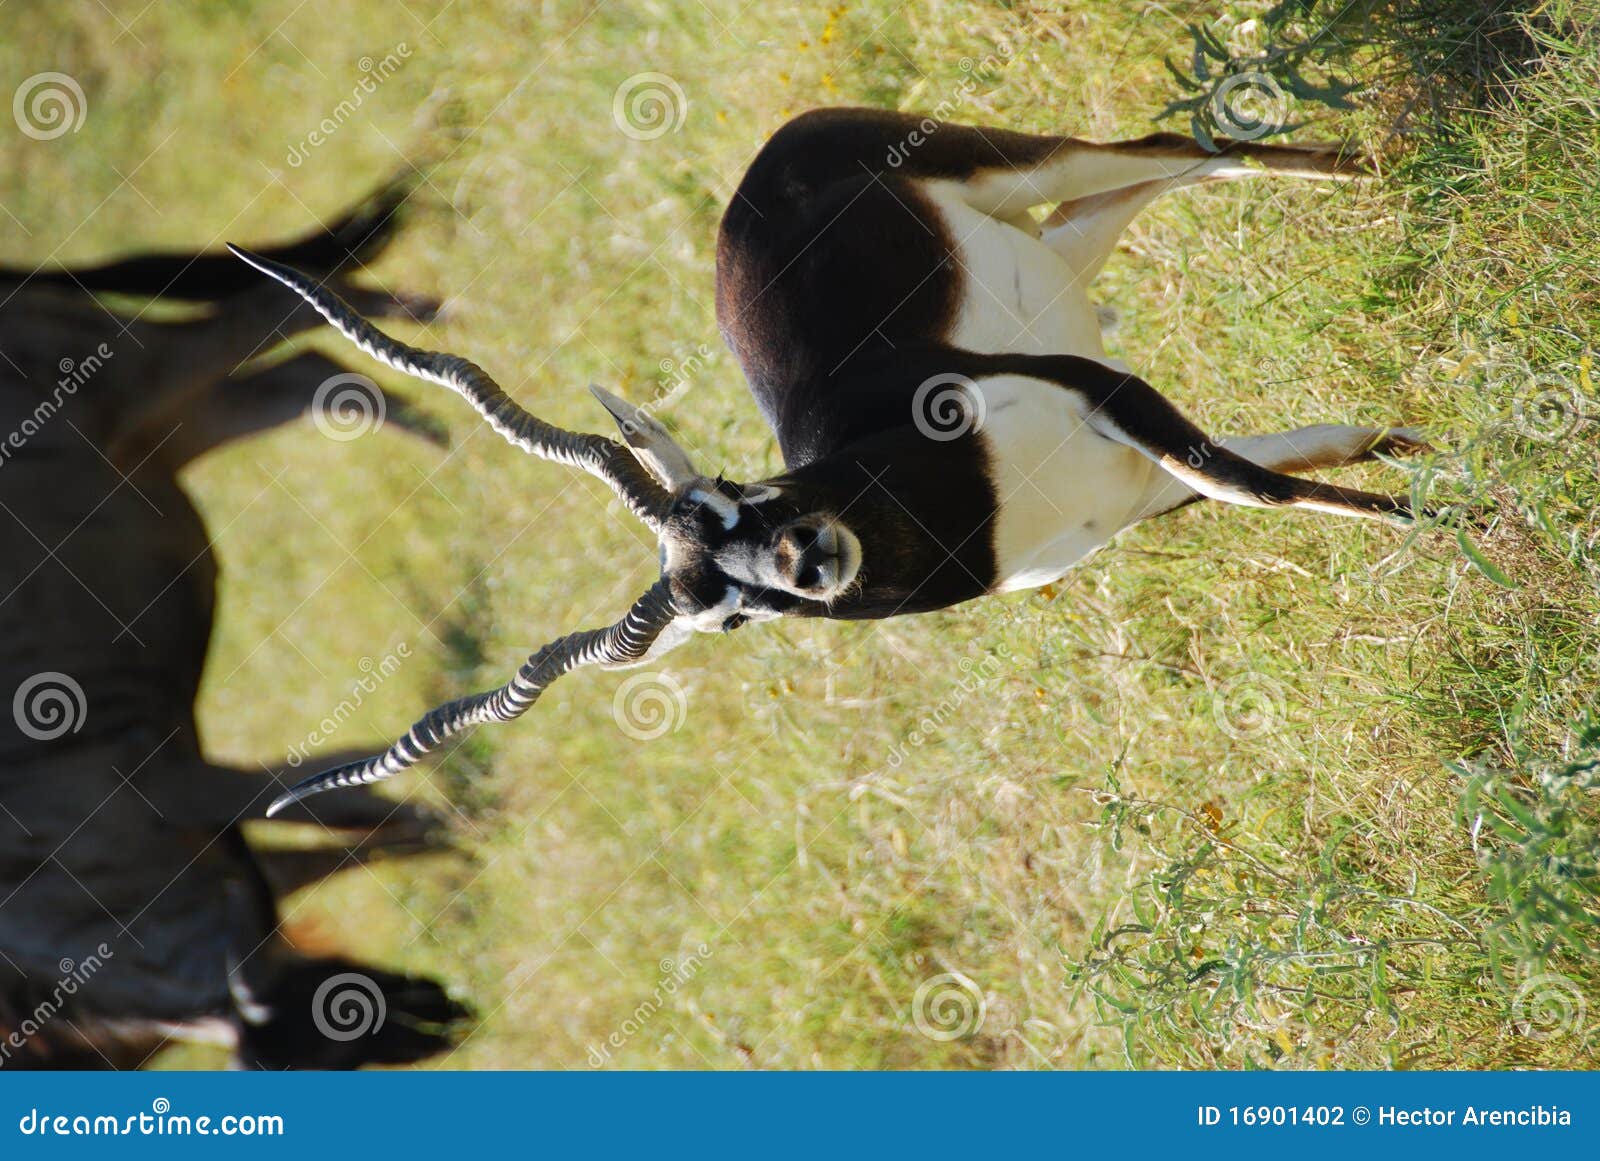 blackbuck antelope (antilope cervicapra)